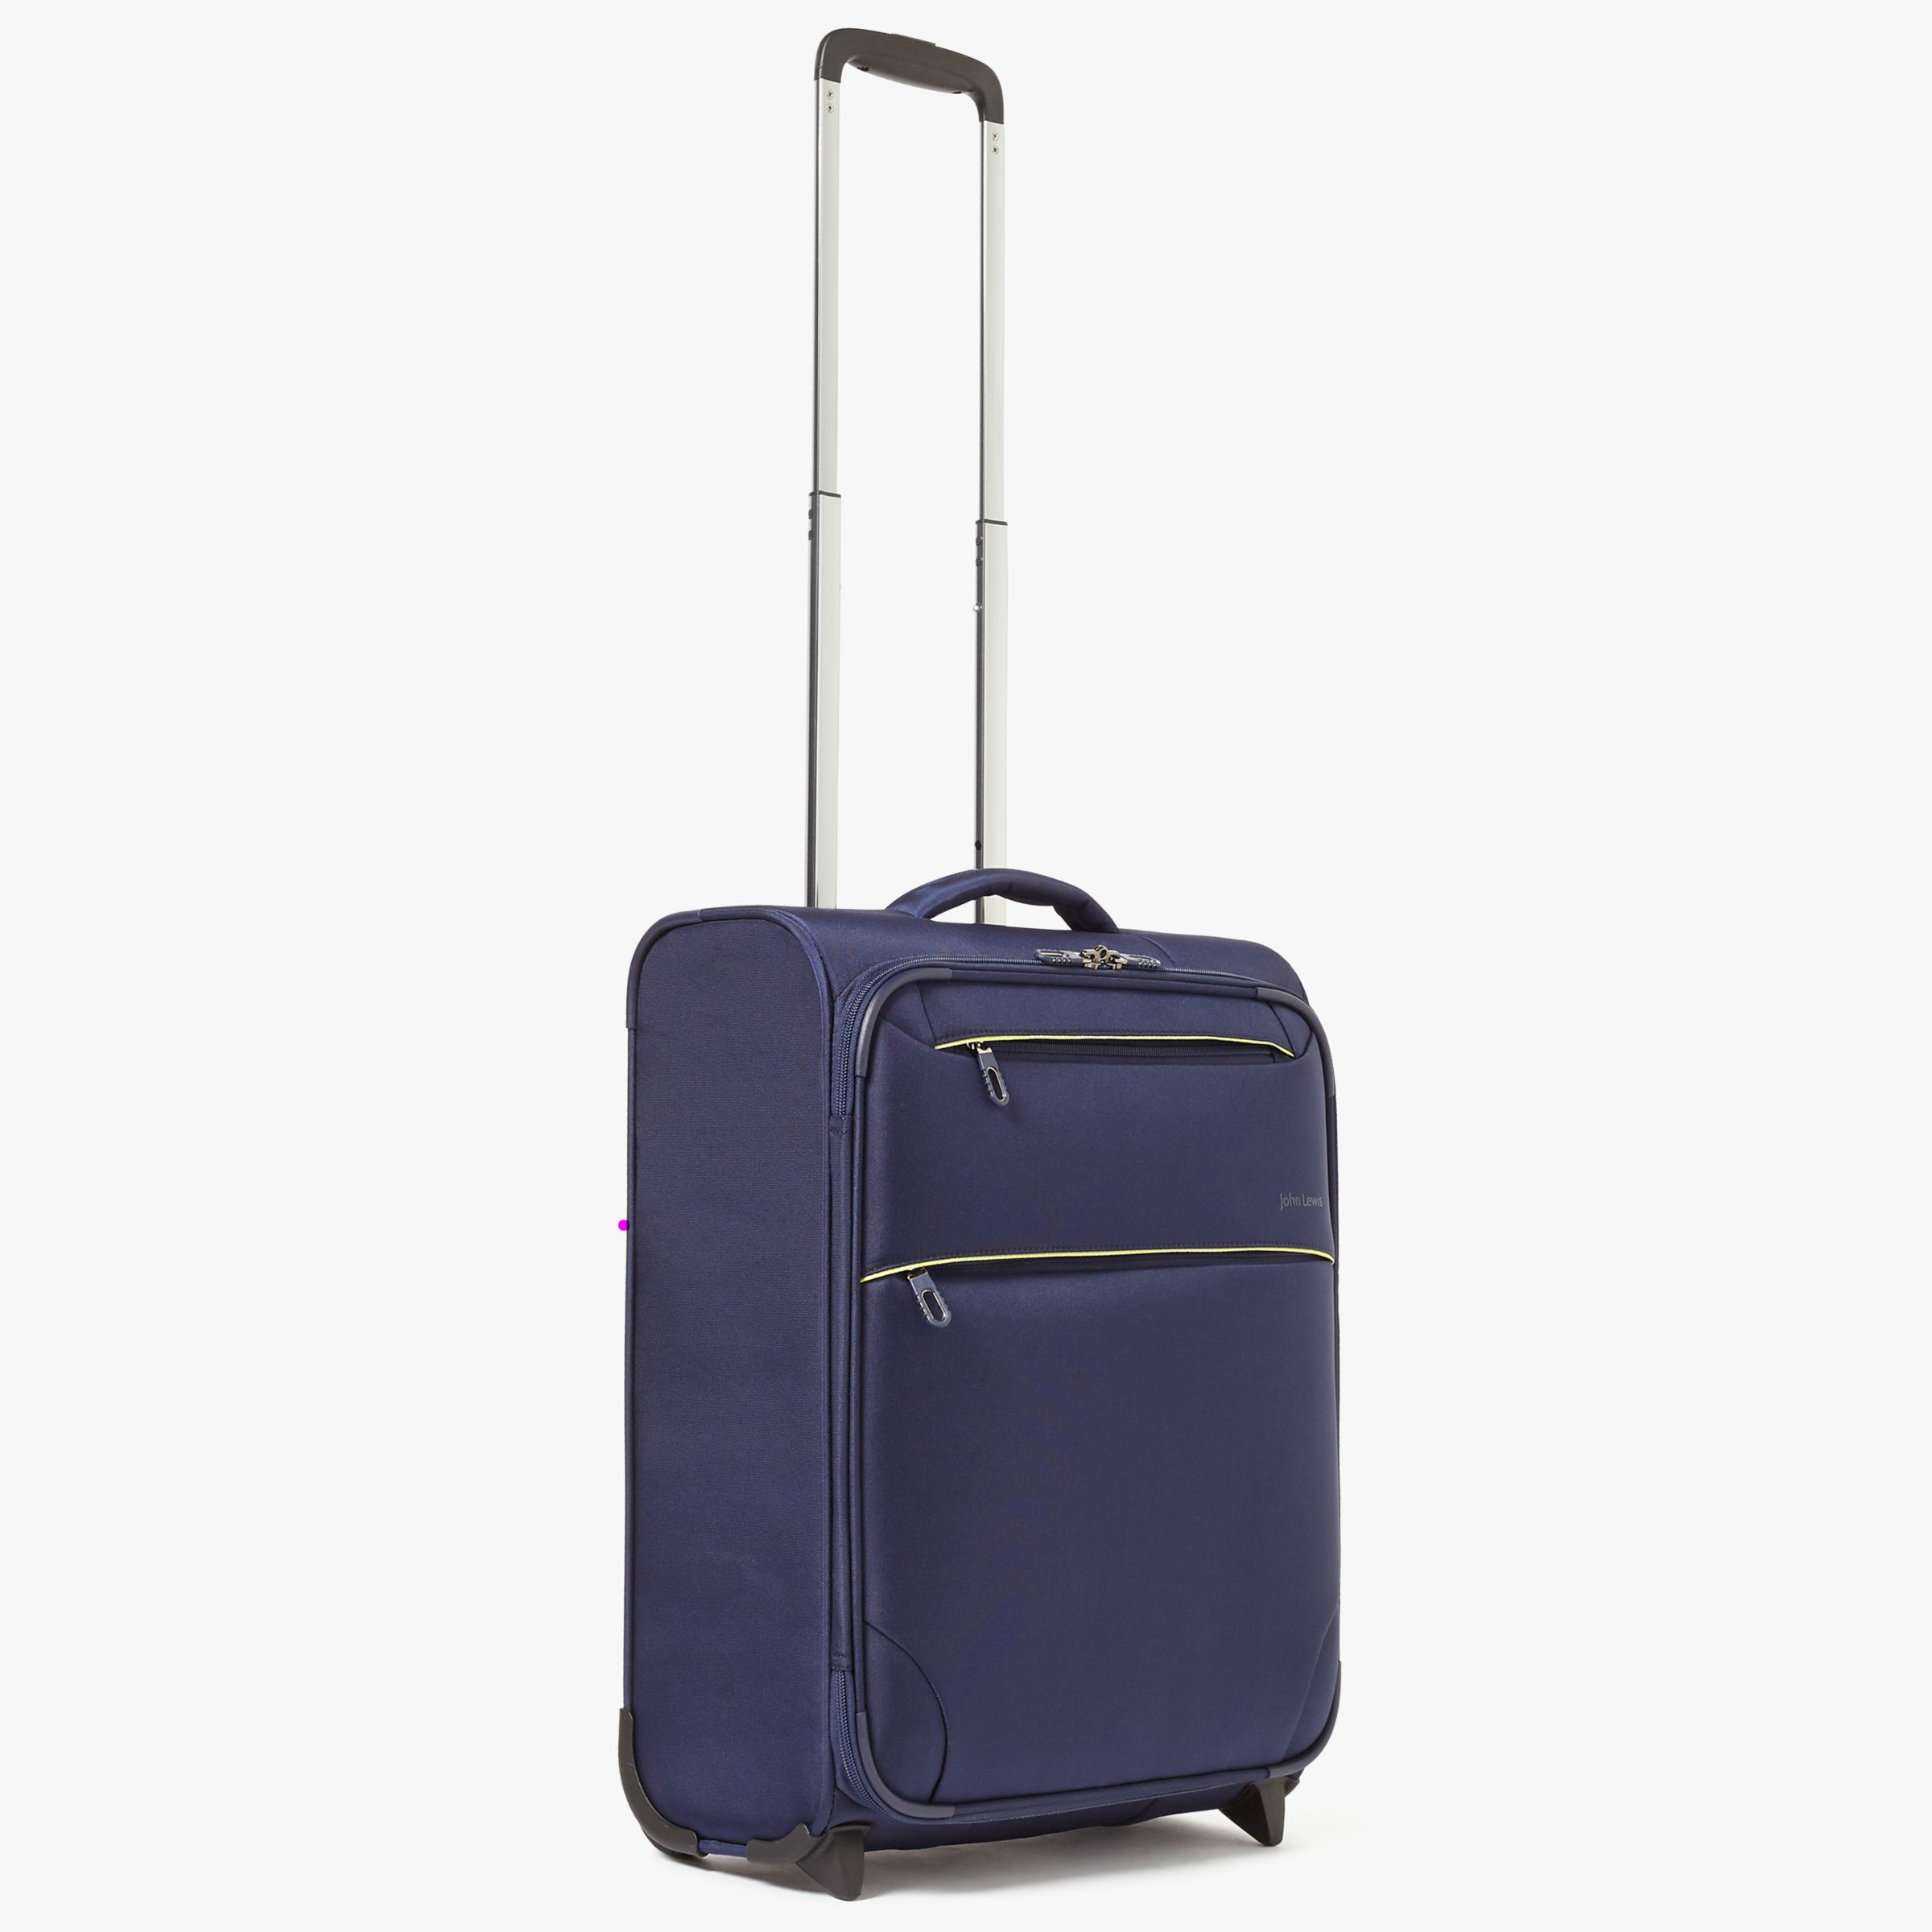 John Lewis & Partners Glide 55cm 2-Wheel Cabin Suitcase